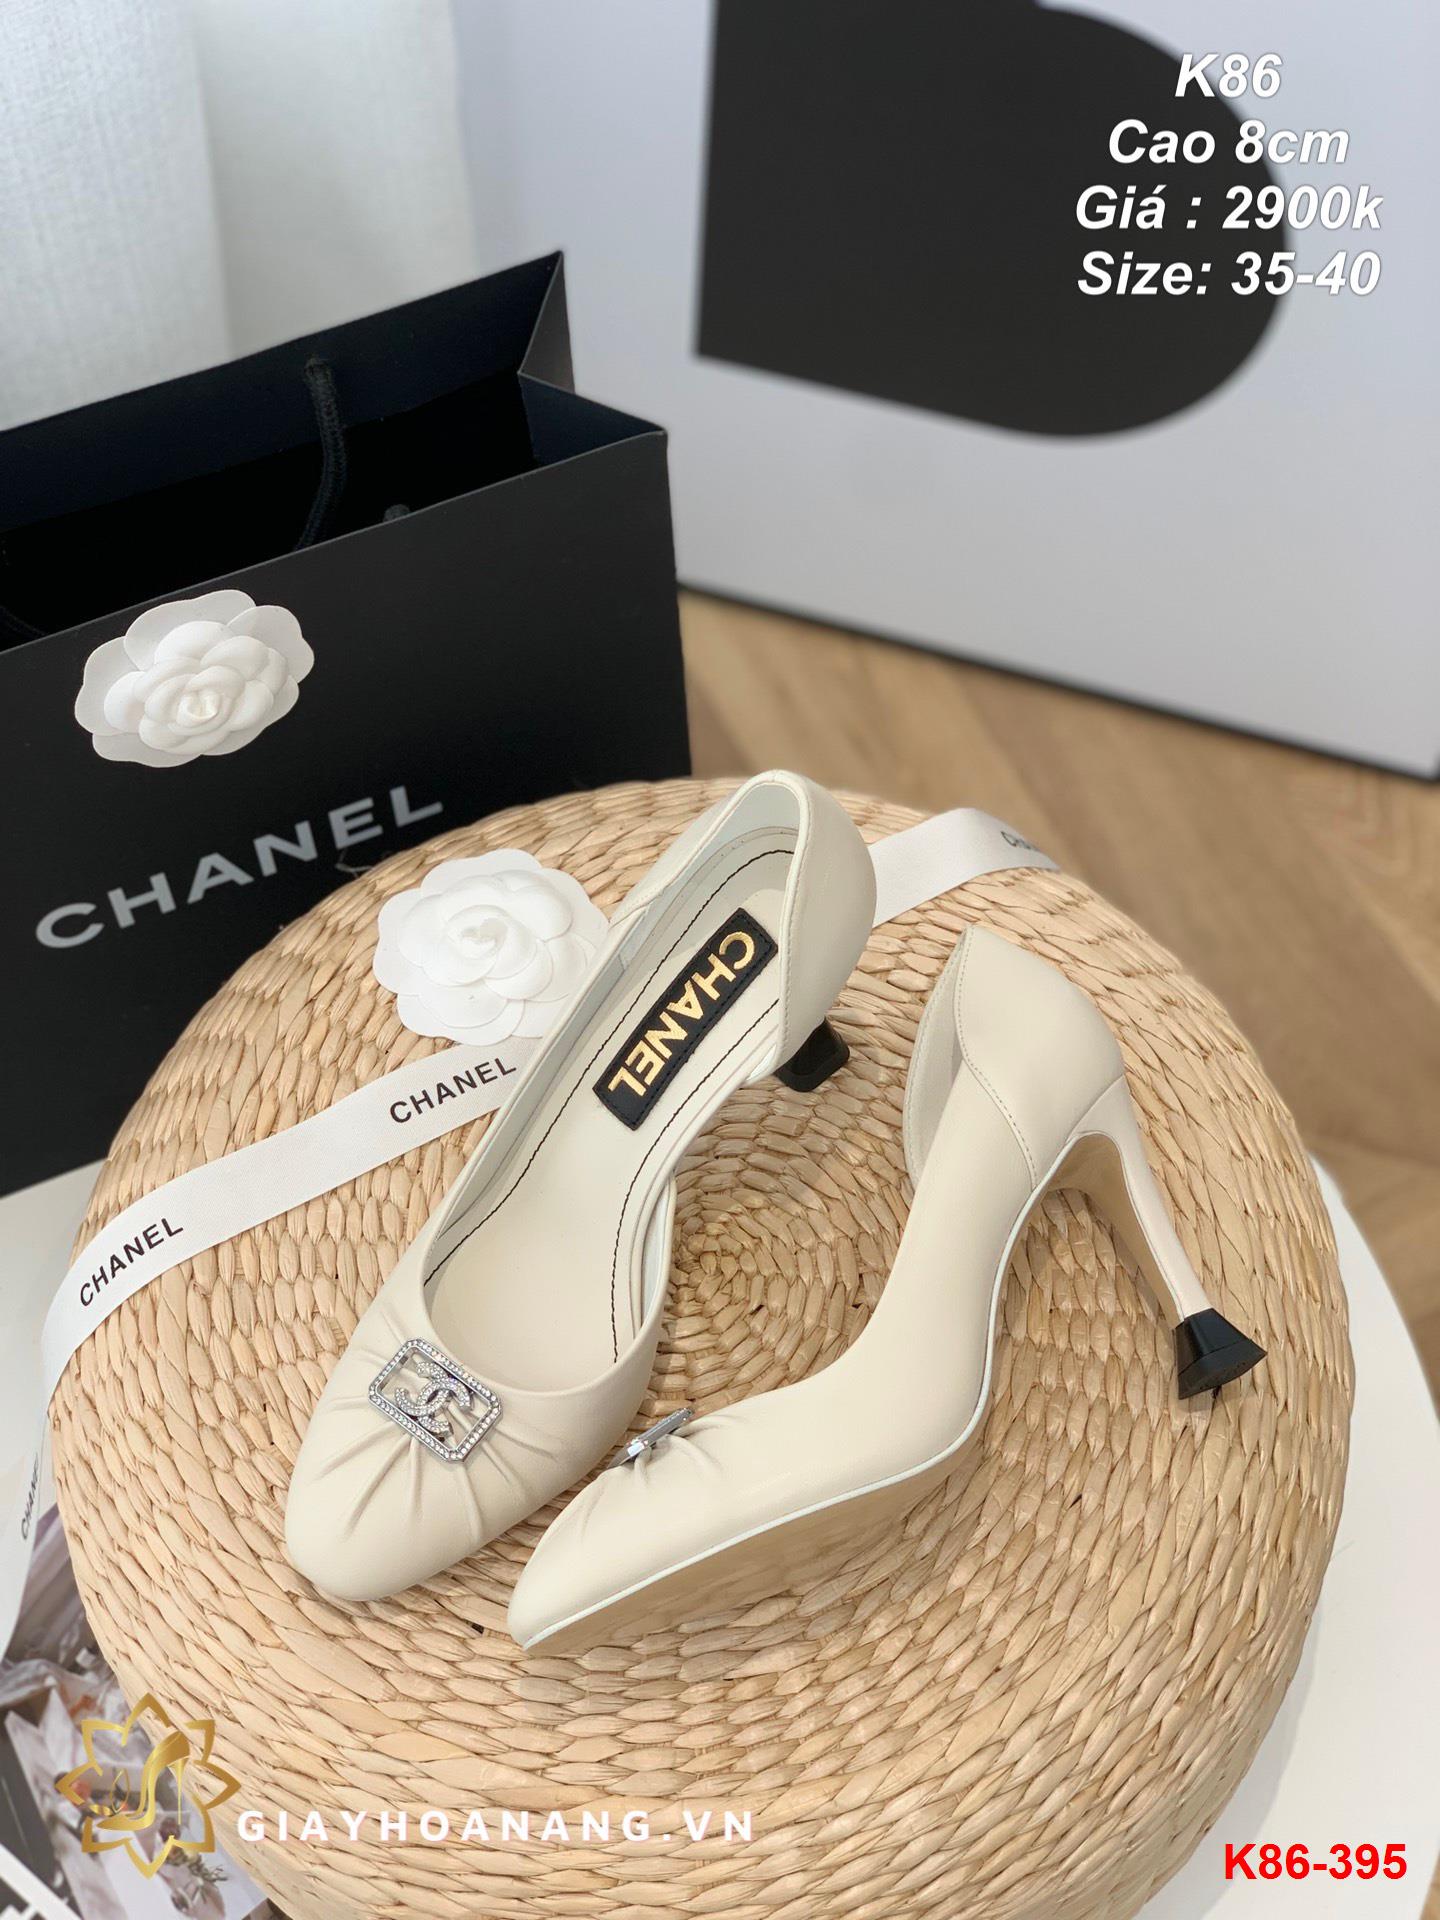 K86-395 Chanel giày cao 8cm siêu cấp